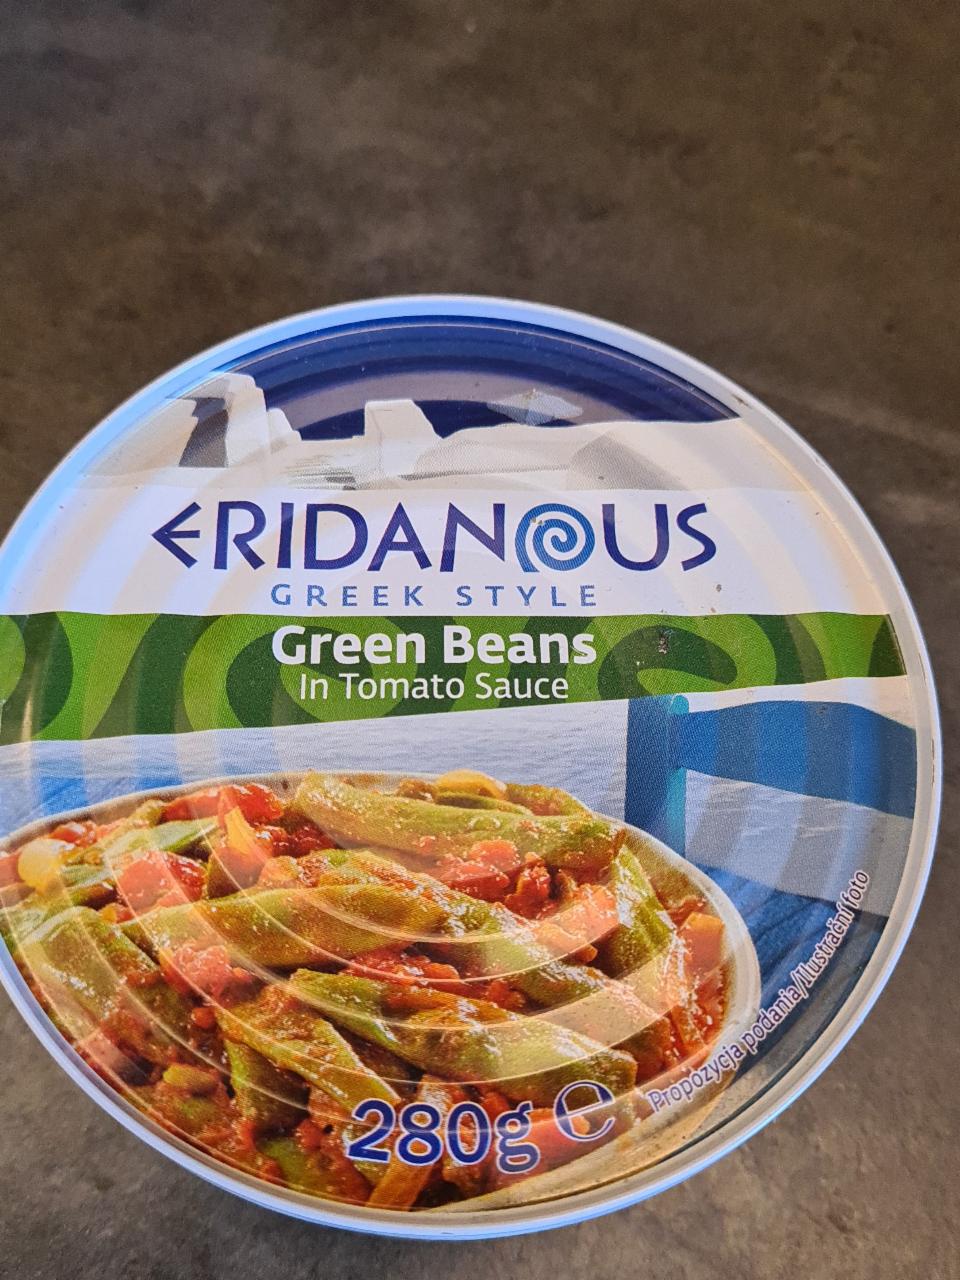 Zdjęcia - green beans in tomato sauce eridanous